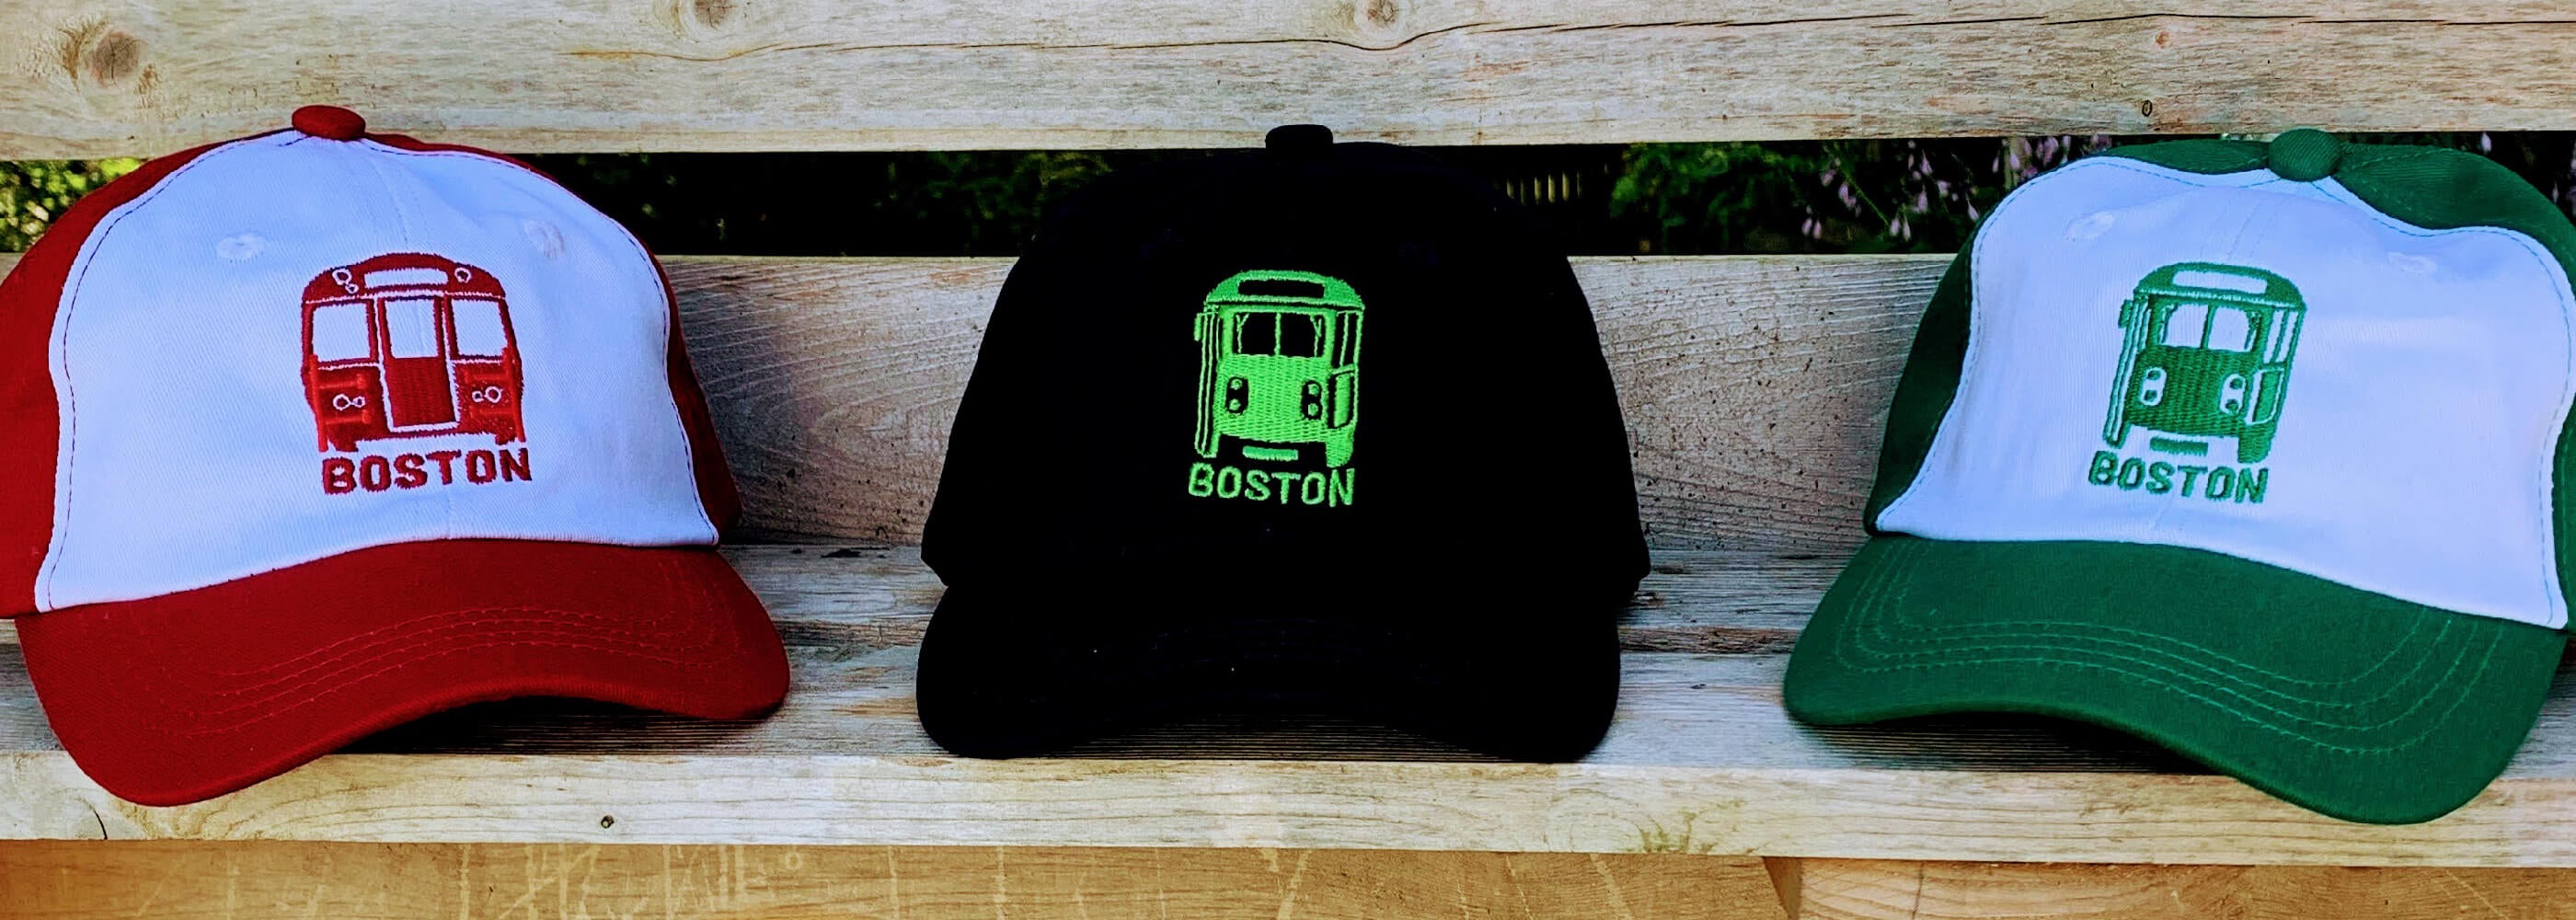 Youth Boston MBTA Subway Train embroidered baseball caps